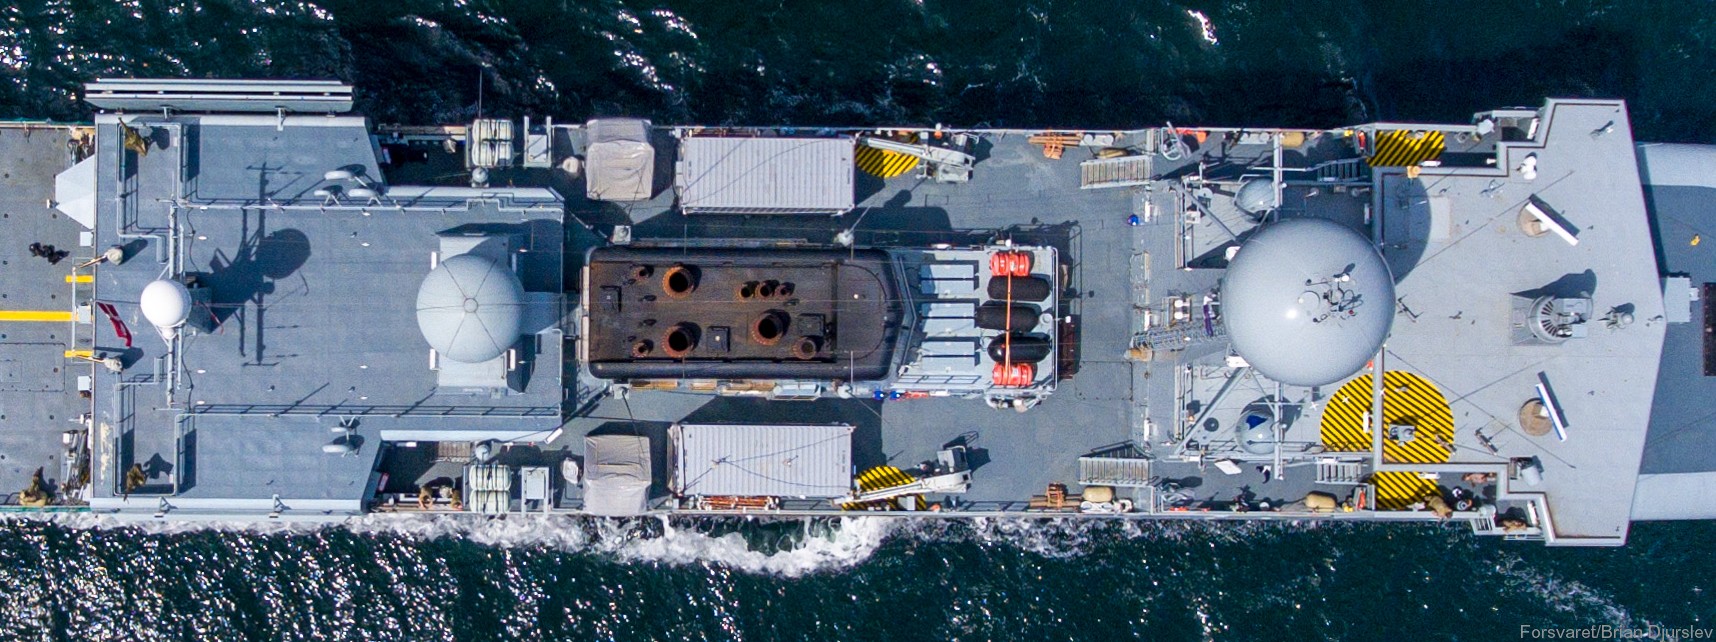 f-357 hdms thetis ocean patrol frigate royal danish navy kongelige danske marine inspektionsskibet 06a